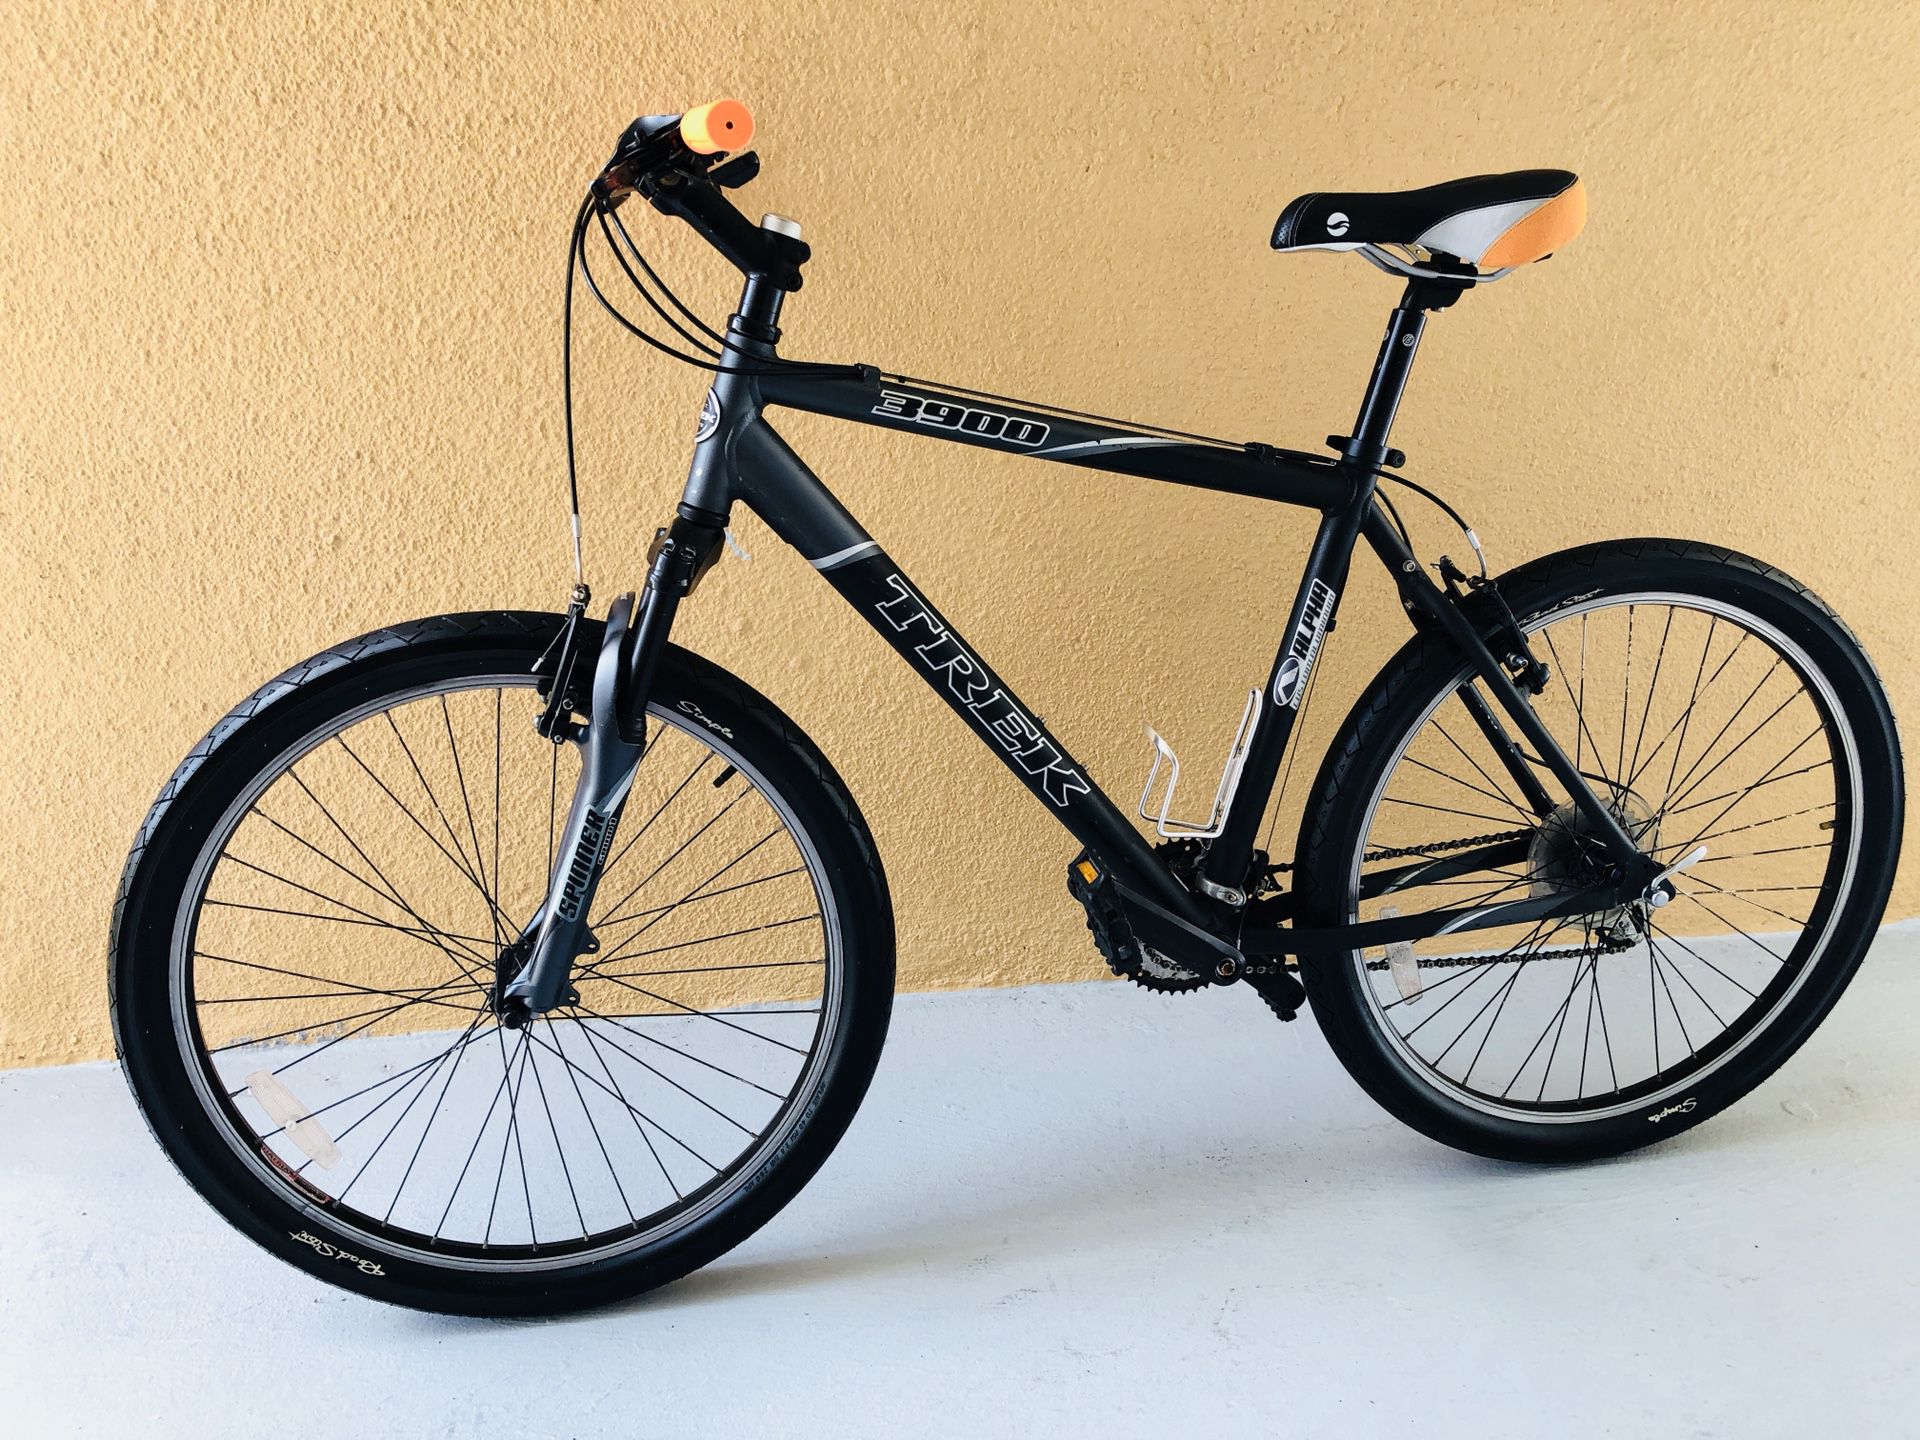 Politie Staat salaris Trek alpha 3900 mountain bike for Sale in Jupiter, FL - OfferUp